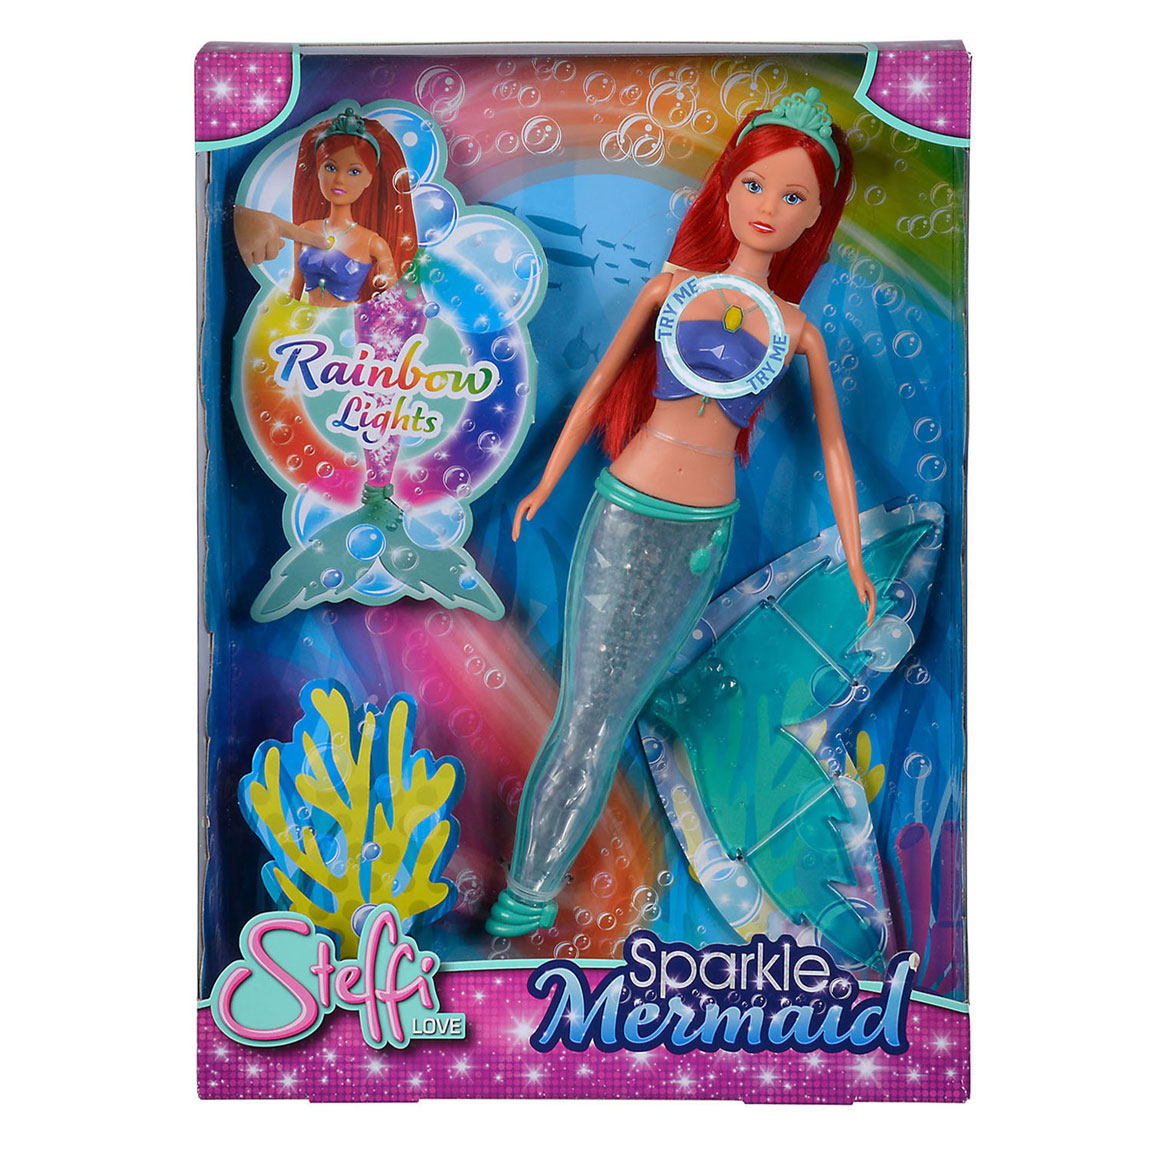 Steffi Sparkle Mermaid